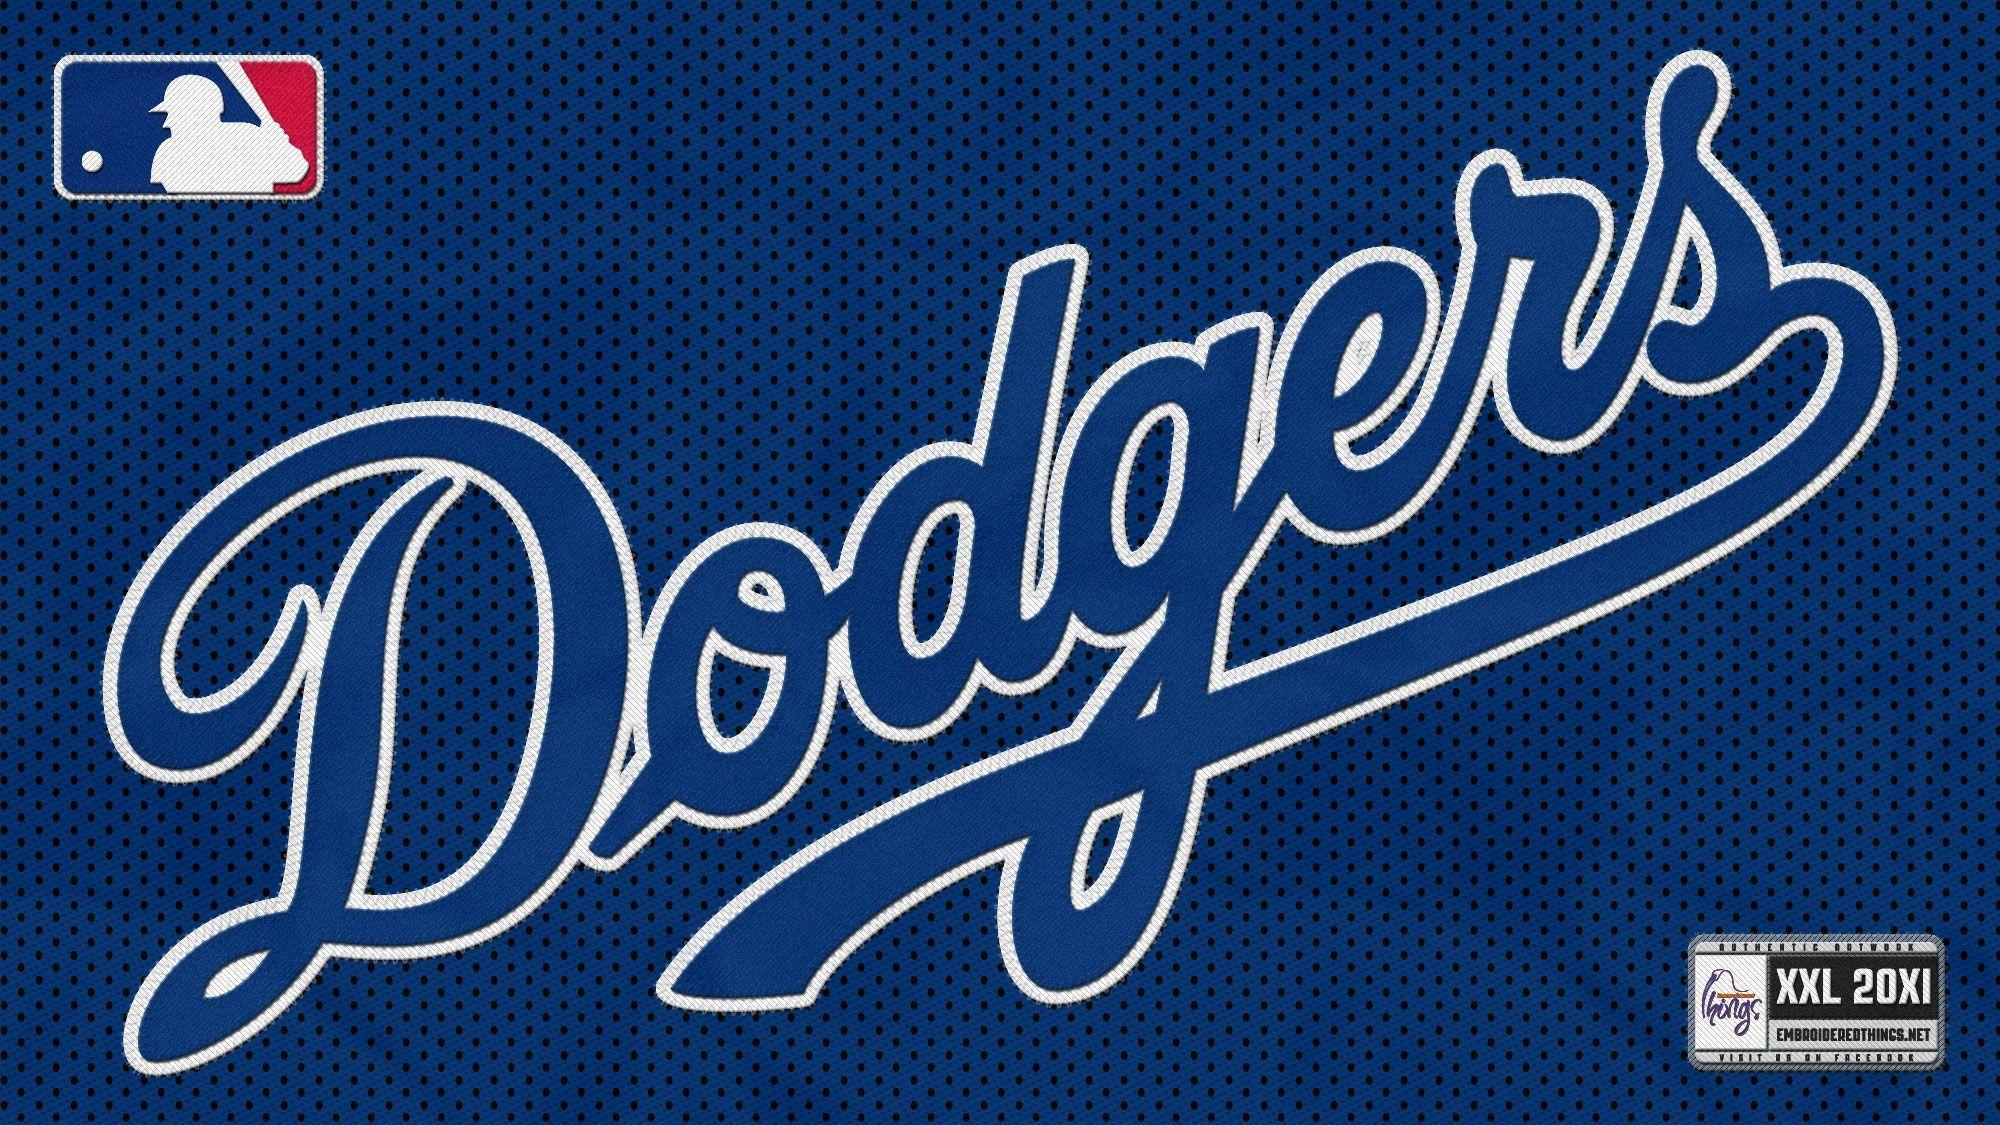 Los Angeles Dodgers wallpaper. Los Angeles Dodgers background